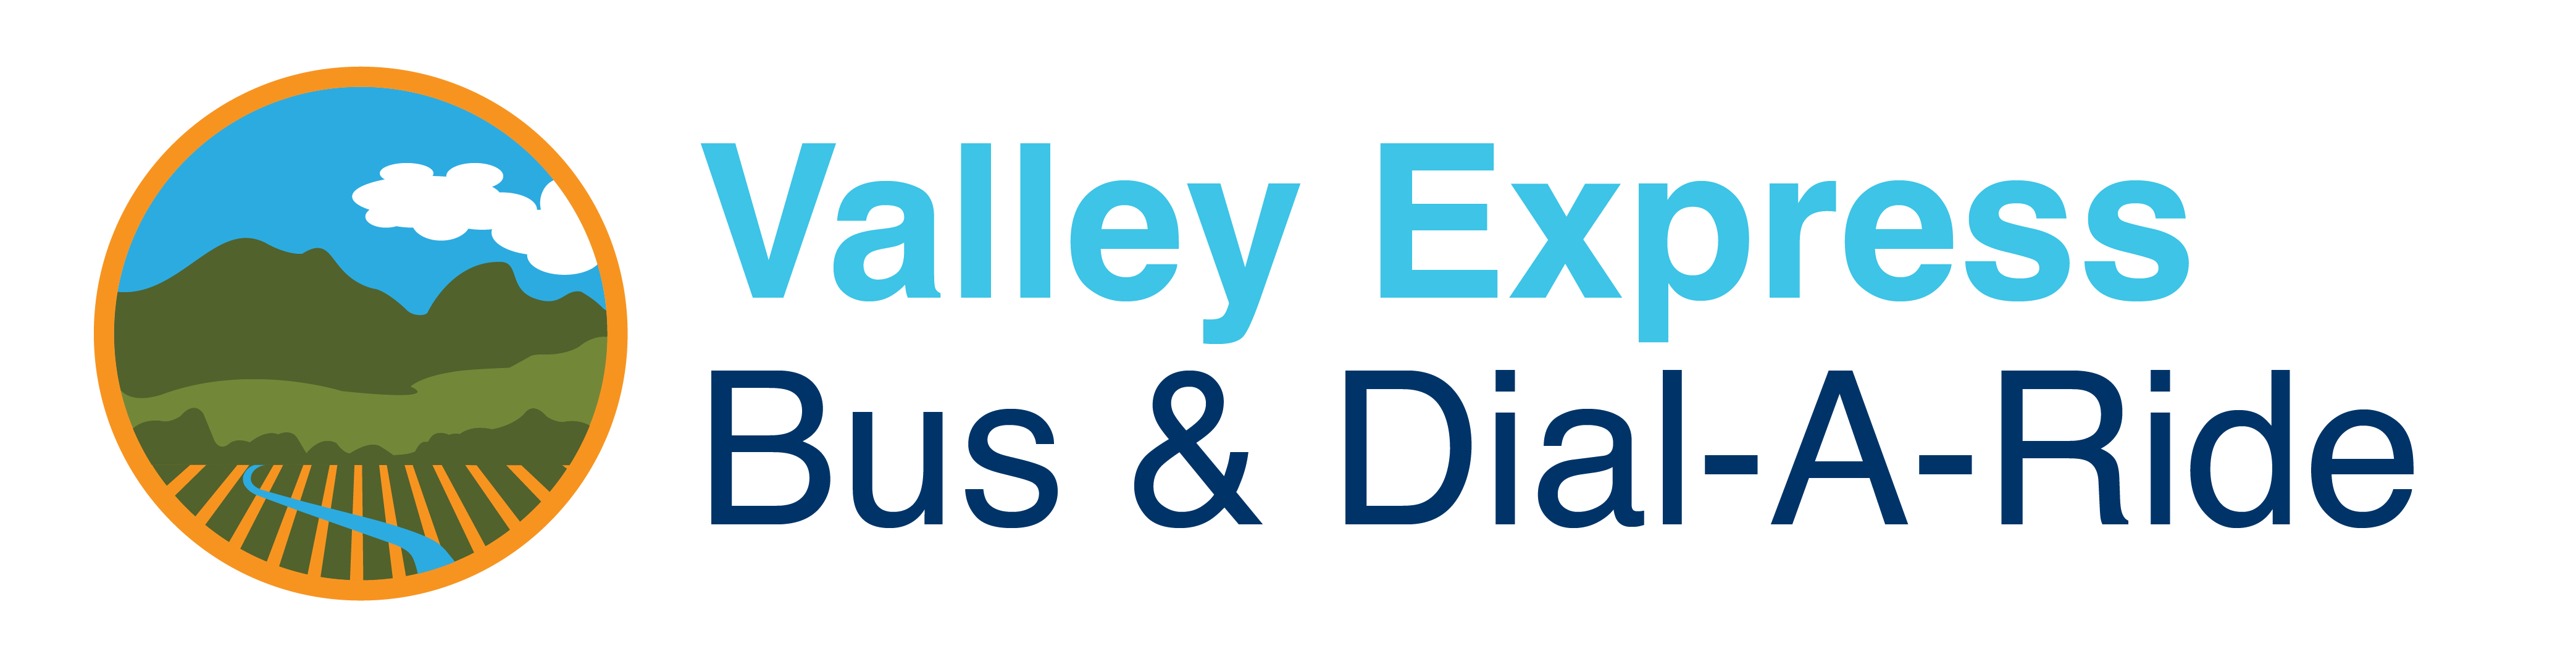 Valley Express Bus and Dial-A-Ride logo